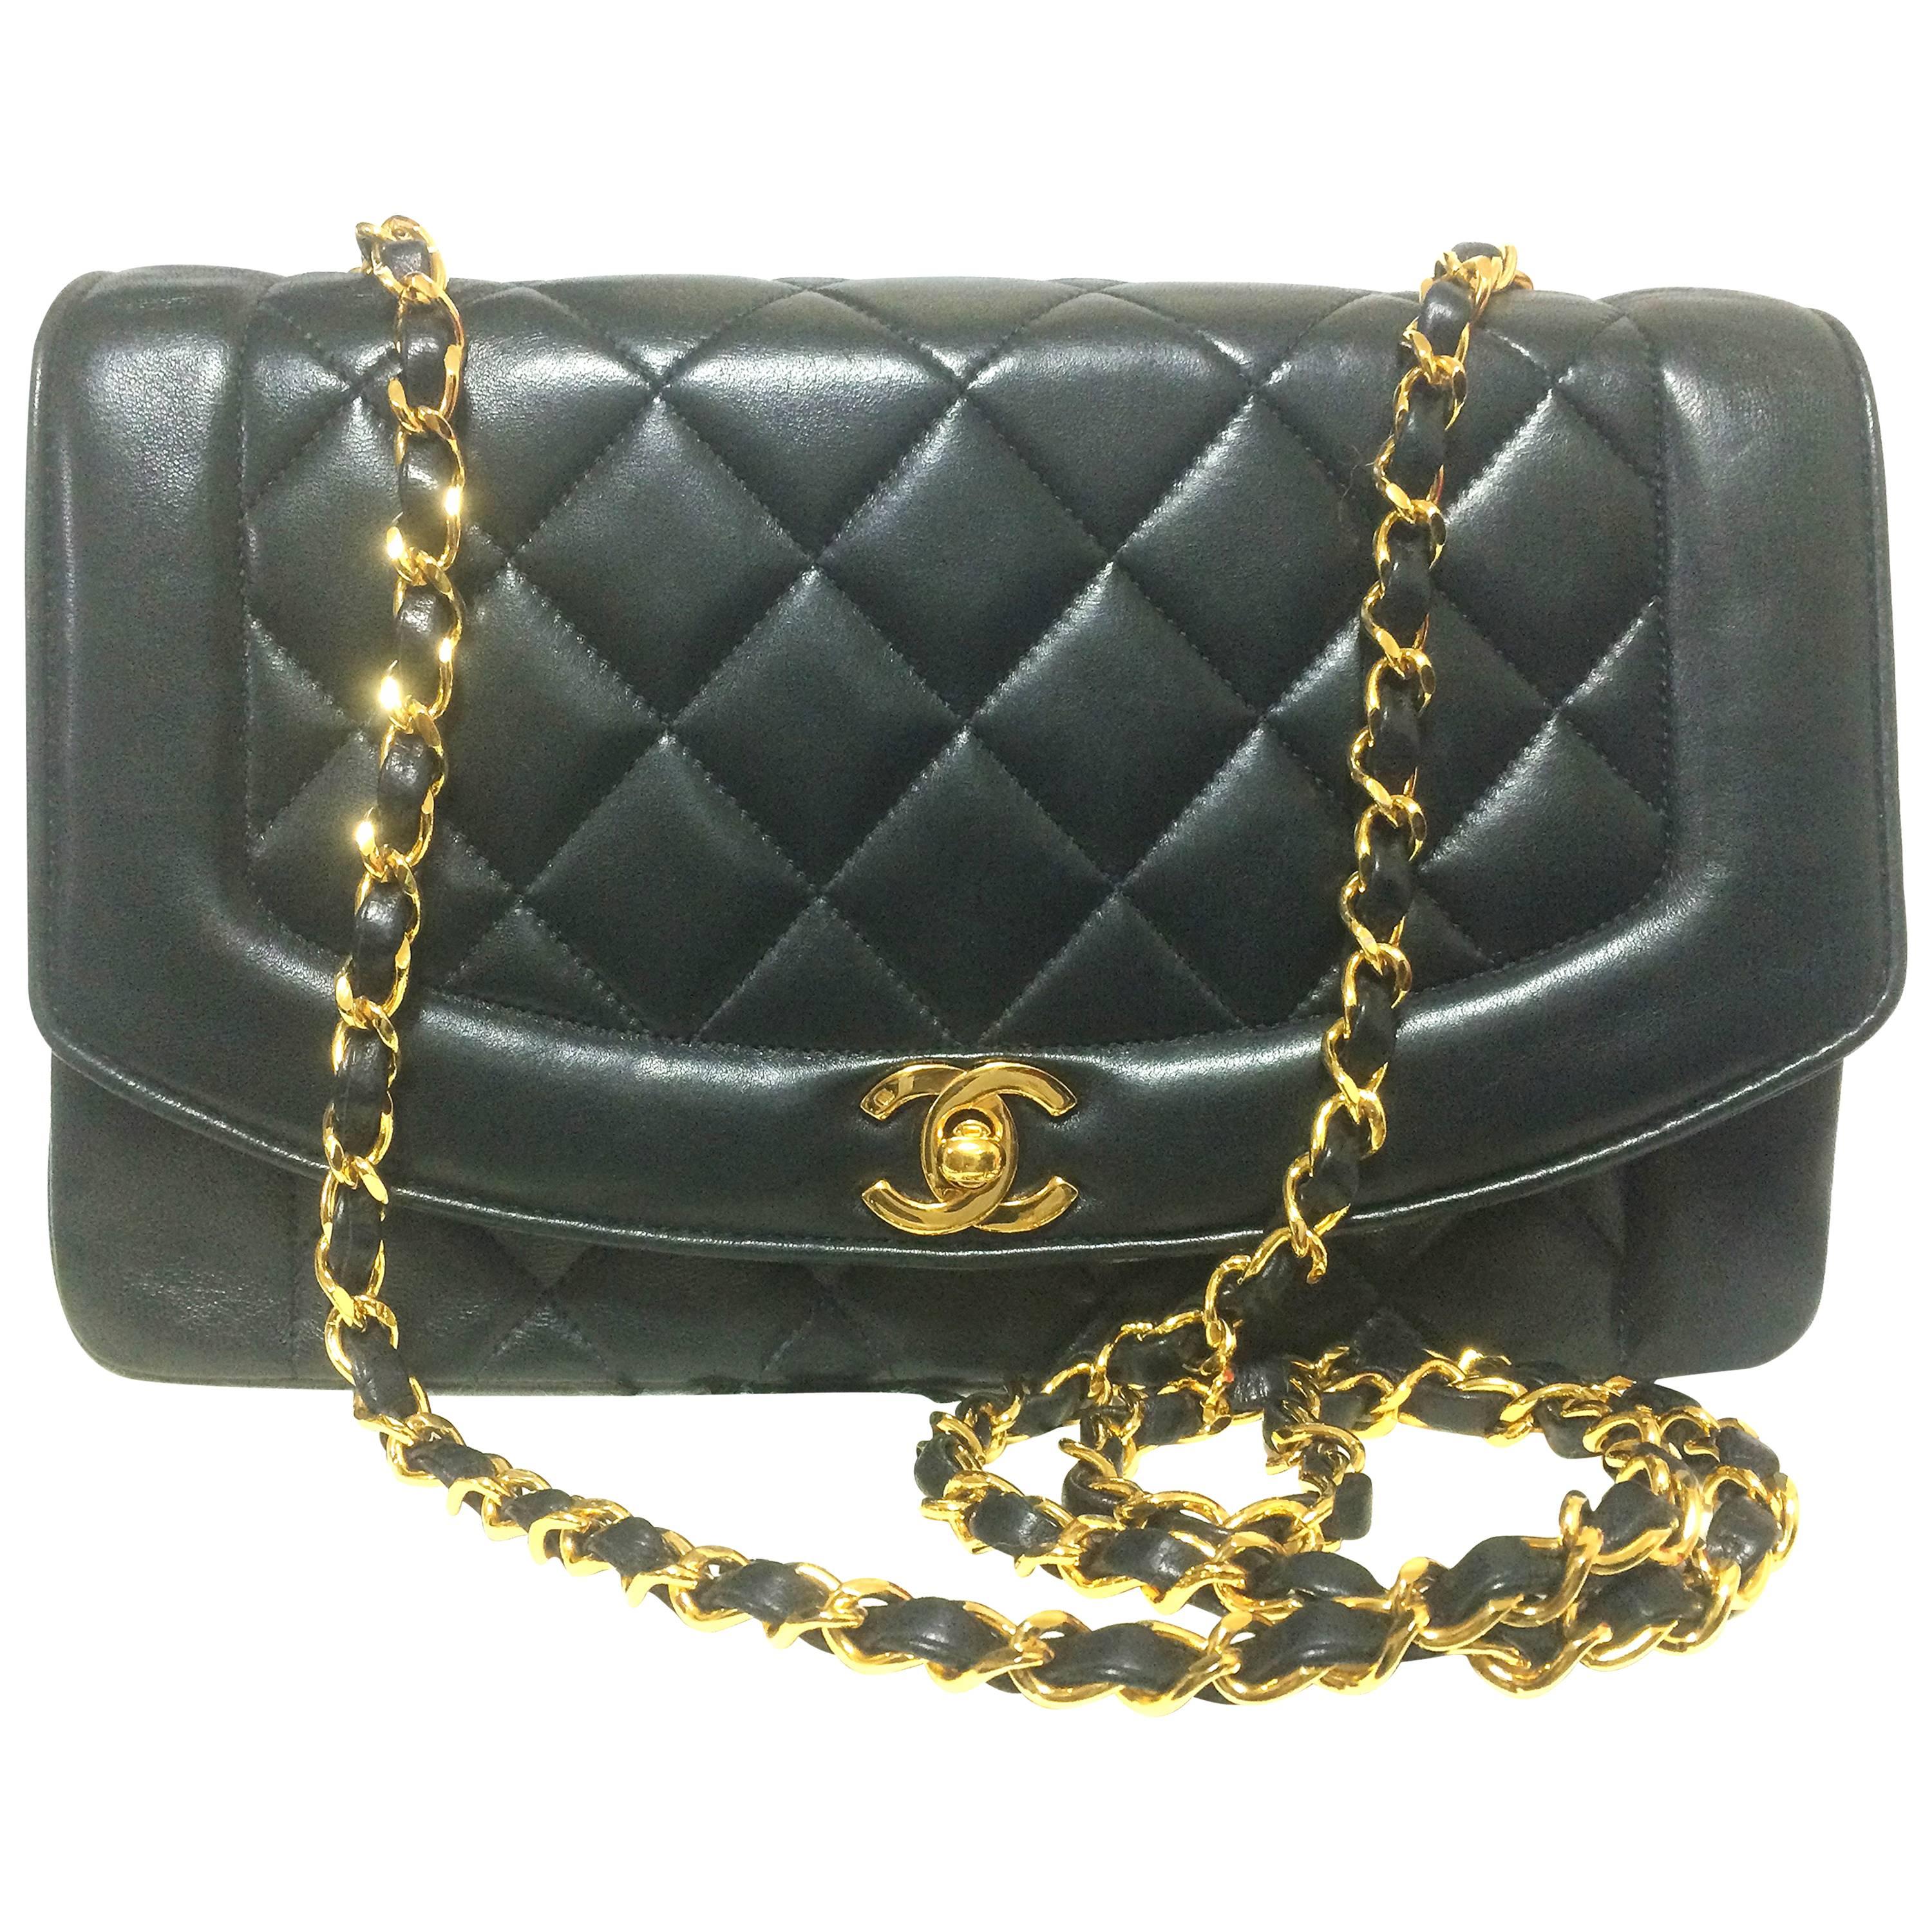 MINT. Vintage CHANEL black lambskin classic flap 2.55 gold chain shoulder bag.